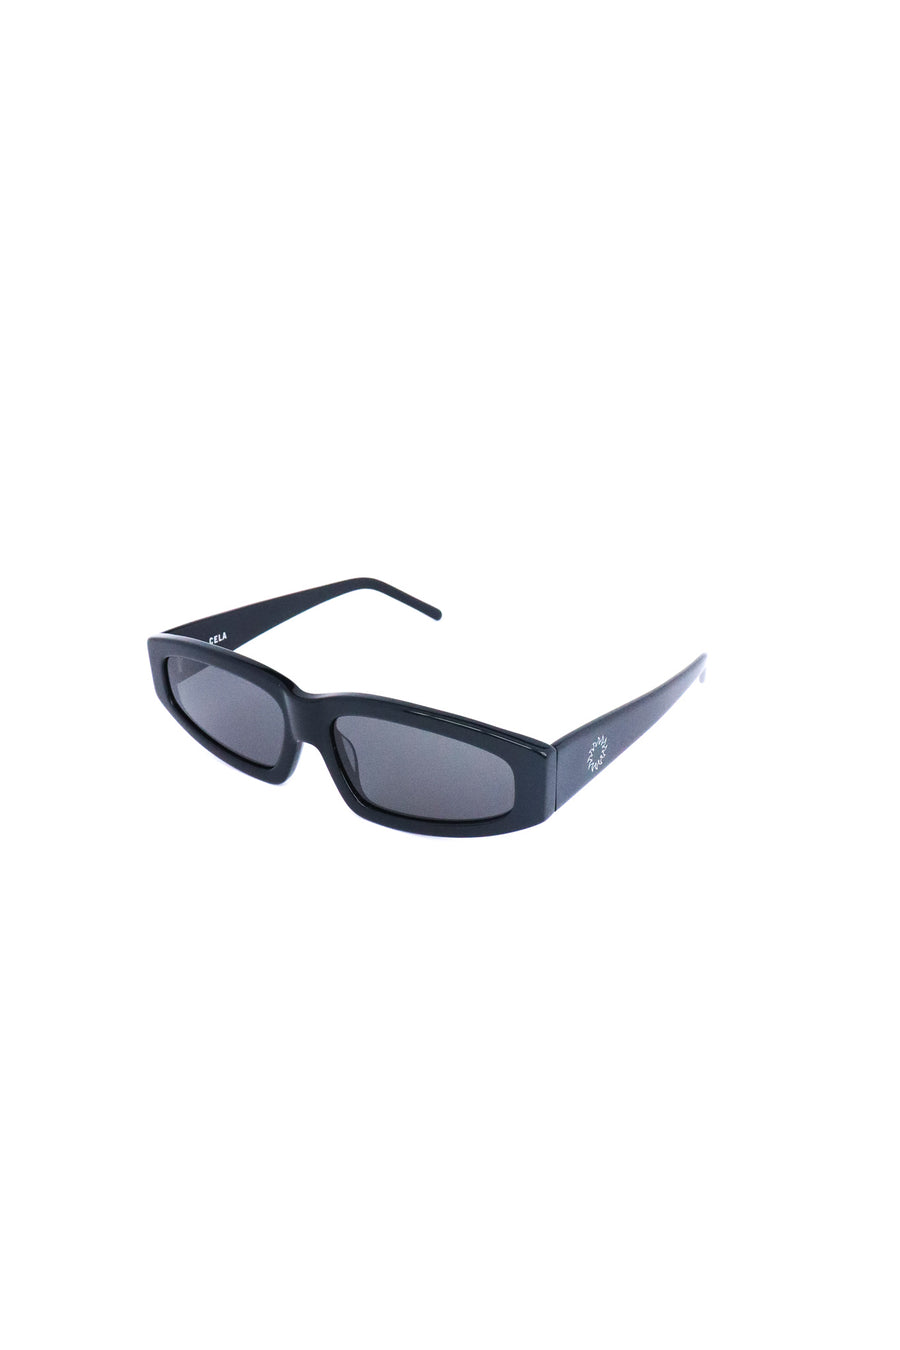 Avoir Eyewear - Cela in Midnight Black - Sunglasses